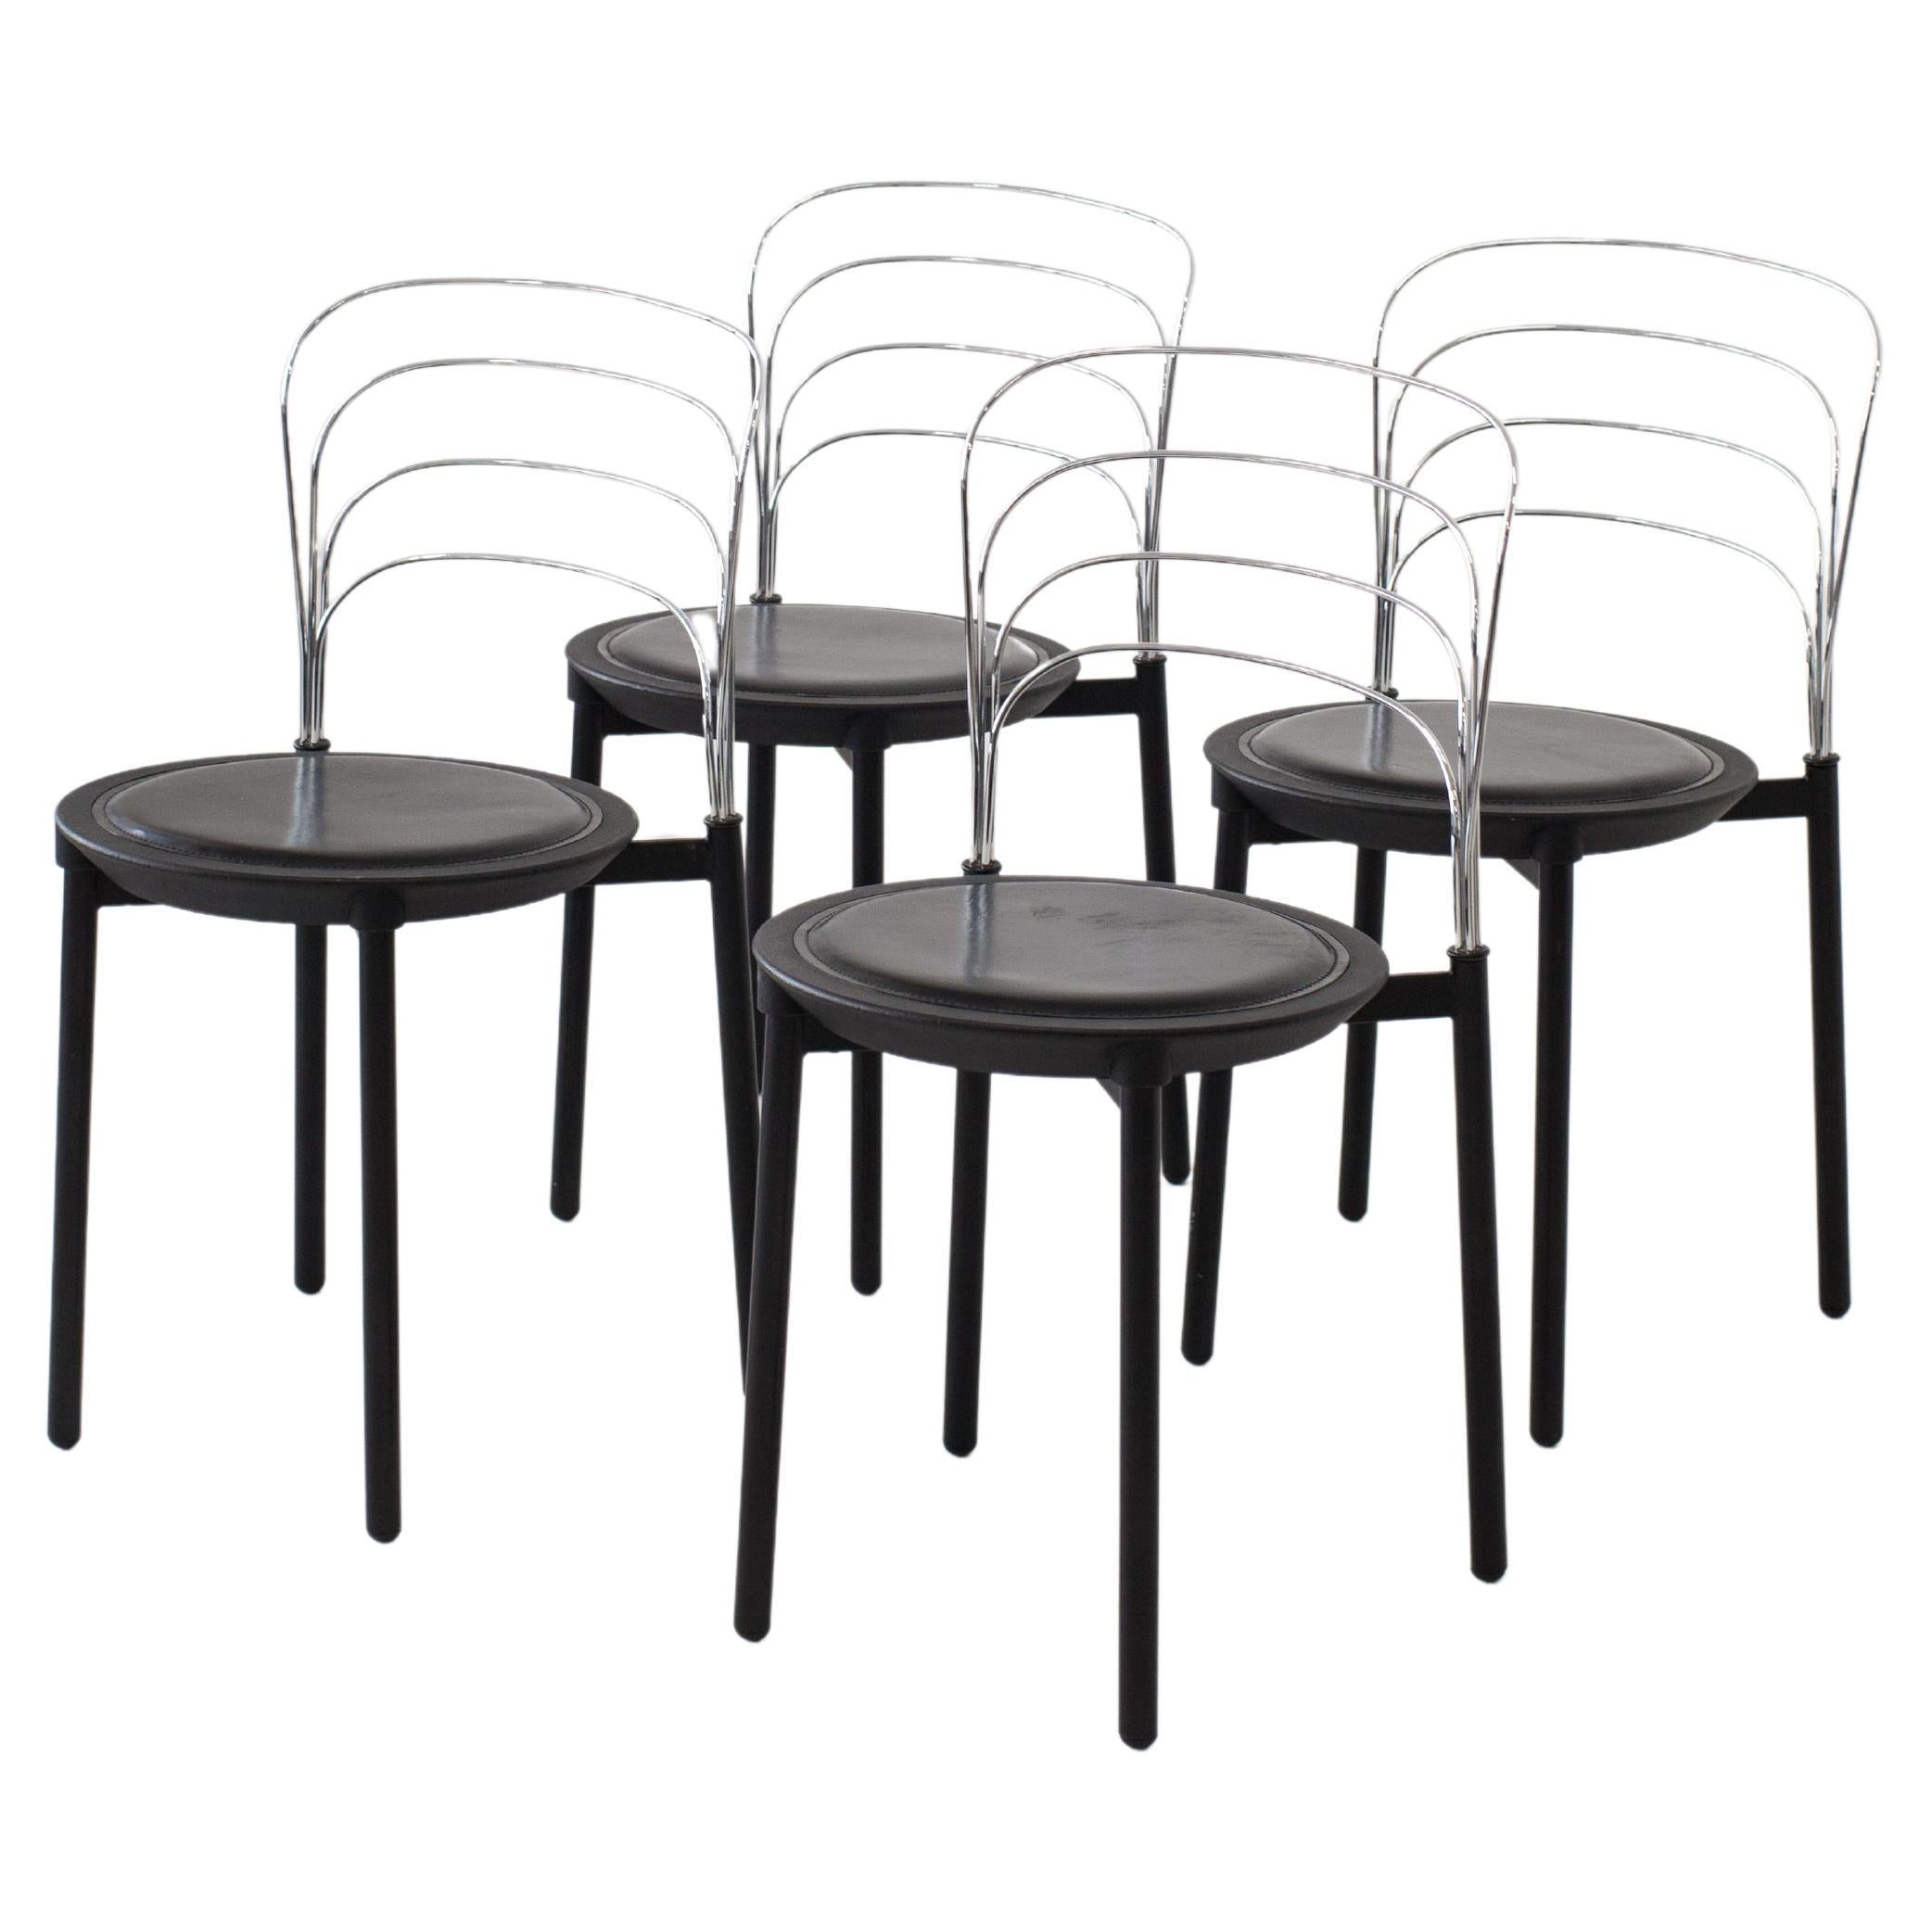 ‘Delfina’ postmodern dining chairs by Giuseppe Raimondi for Tetide, 1987